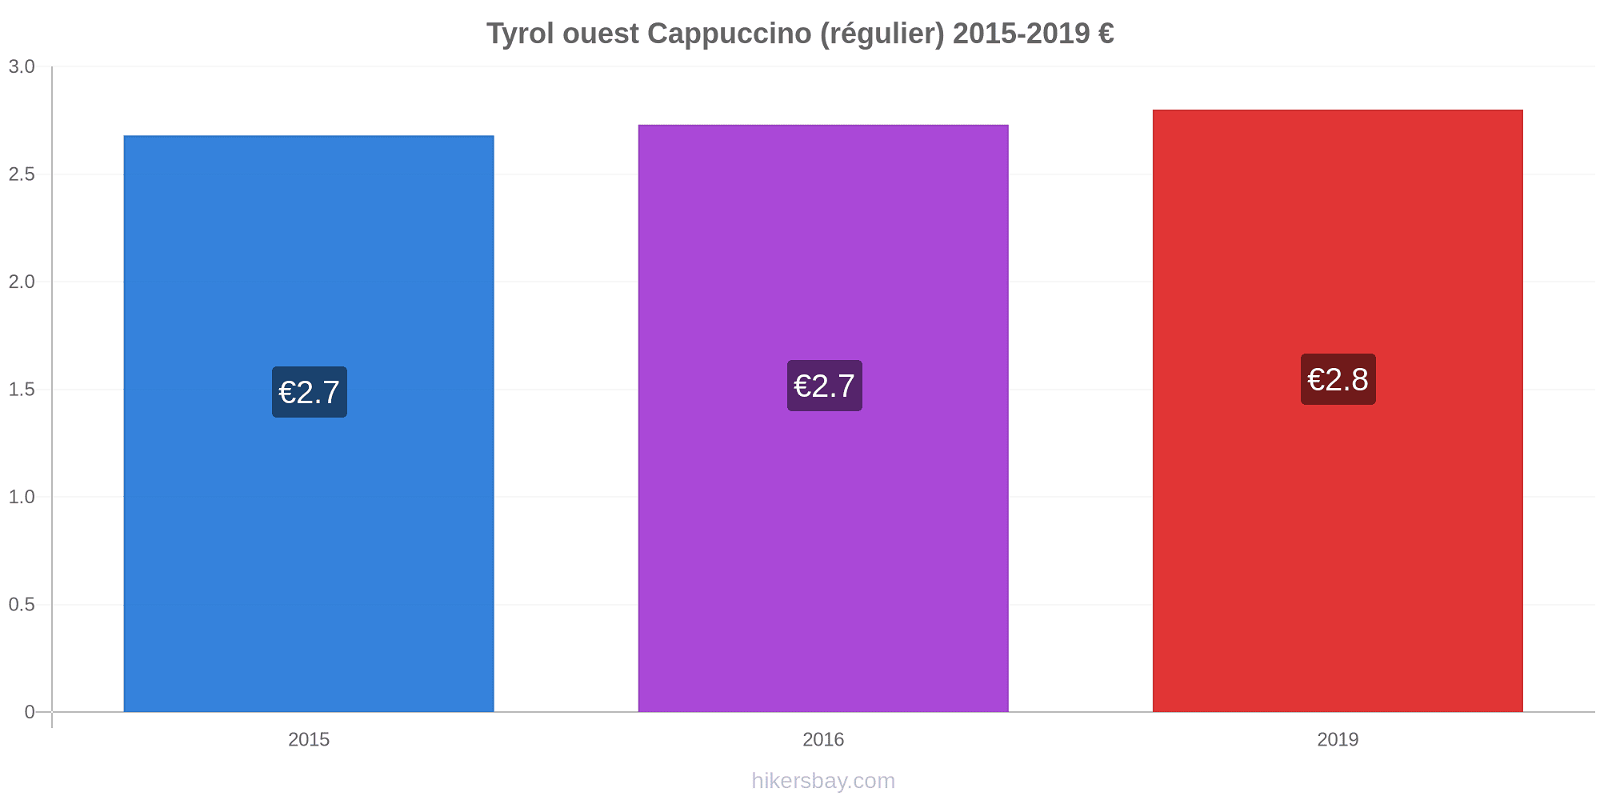 Tyrol ouest changements de prix Cappuccino (régulier) hikersbay.com